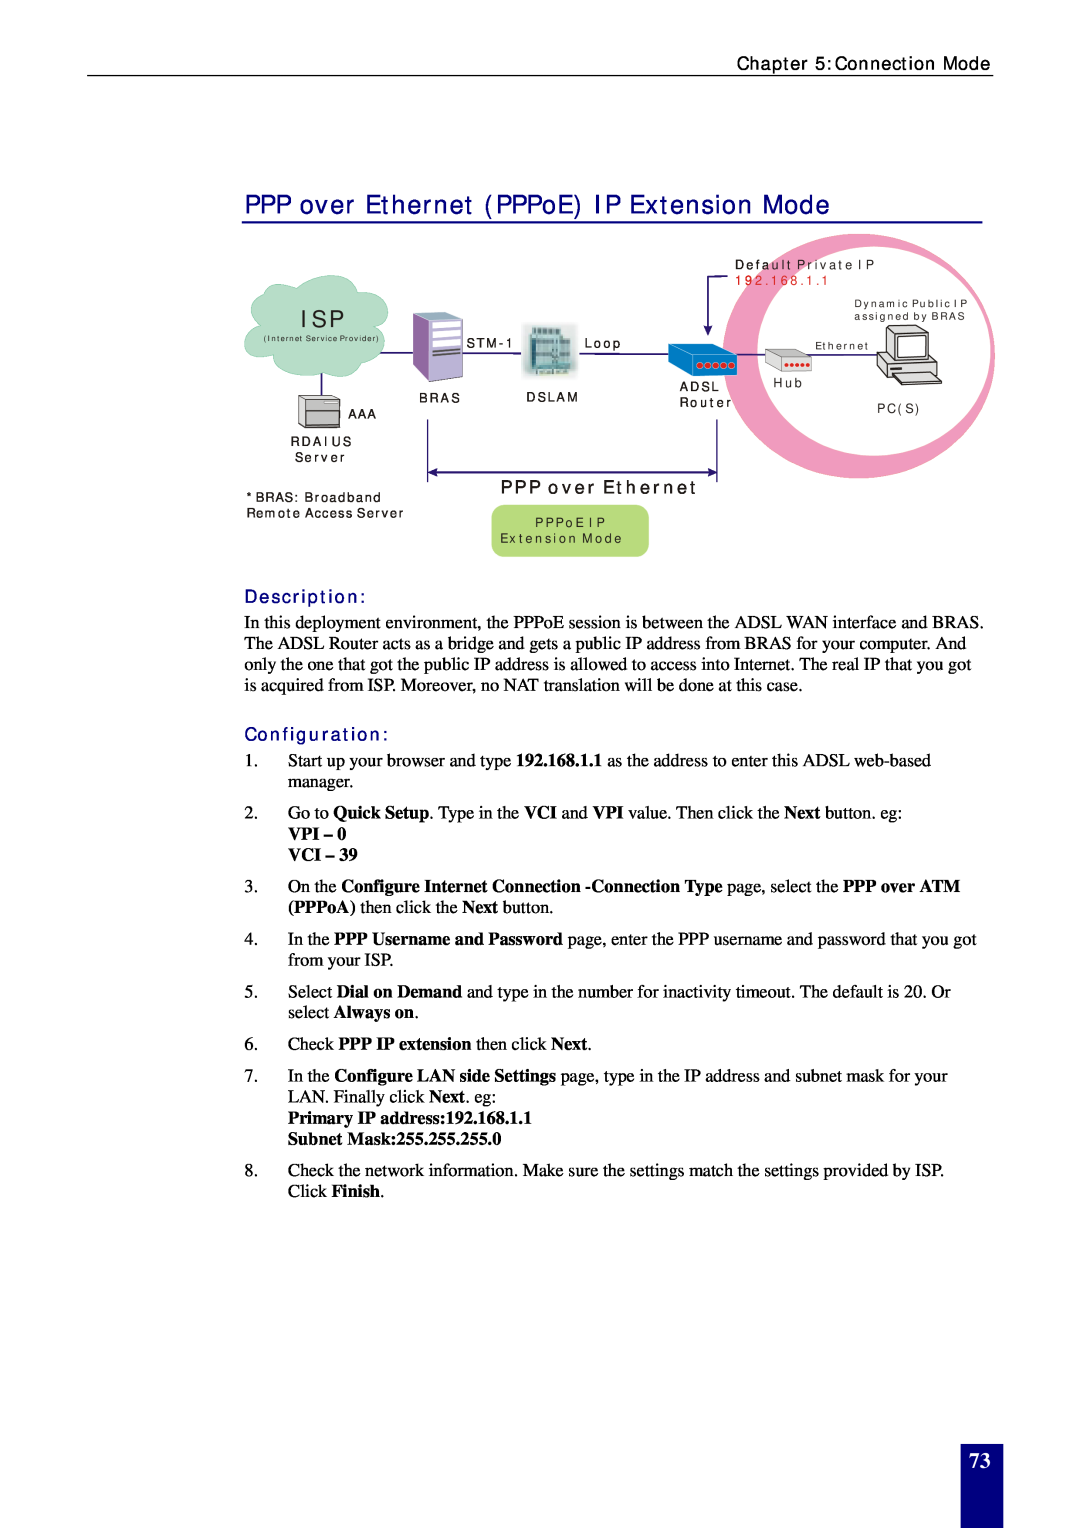 Dynalink RTA770W user manual PPP over Ethernet PPPoE IP Extension Mode, Description, Configuration, VPI - 0 VCI 